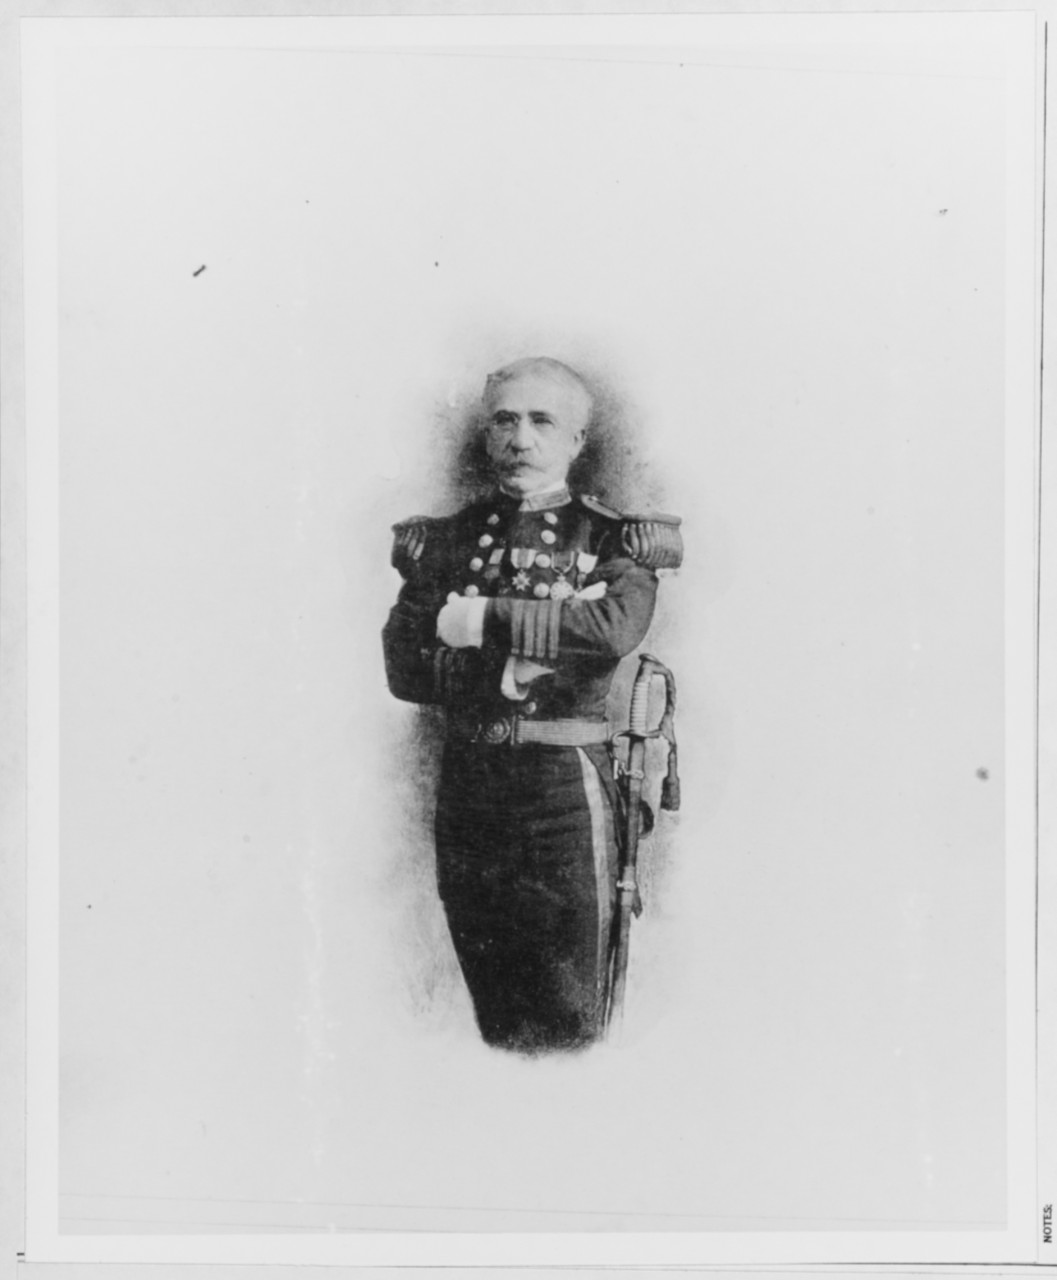 Captain John Russell Bartlett